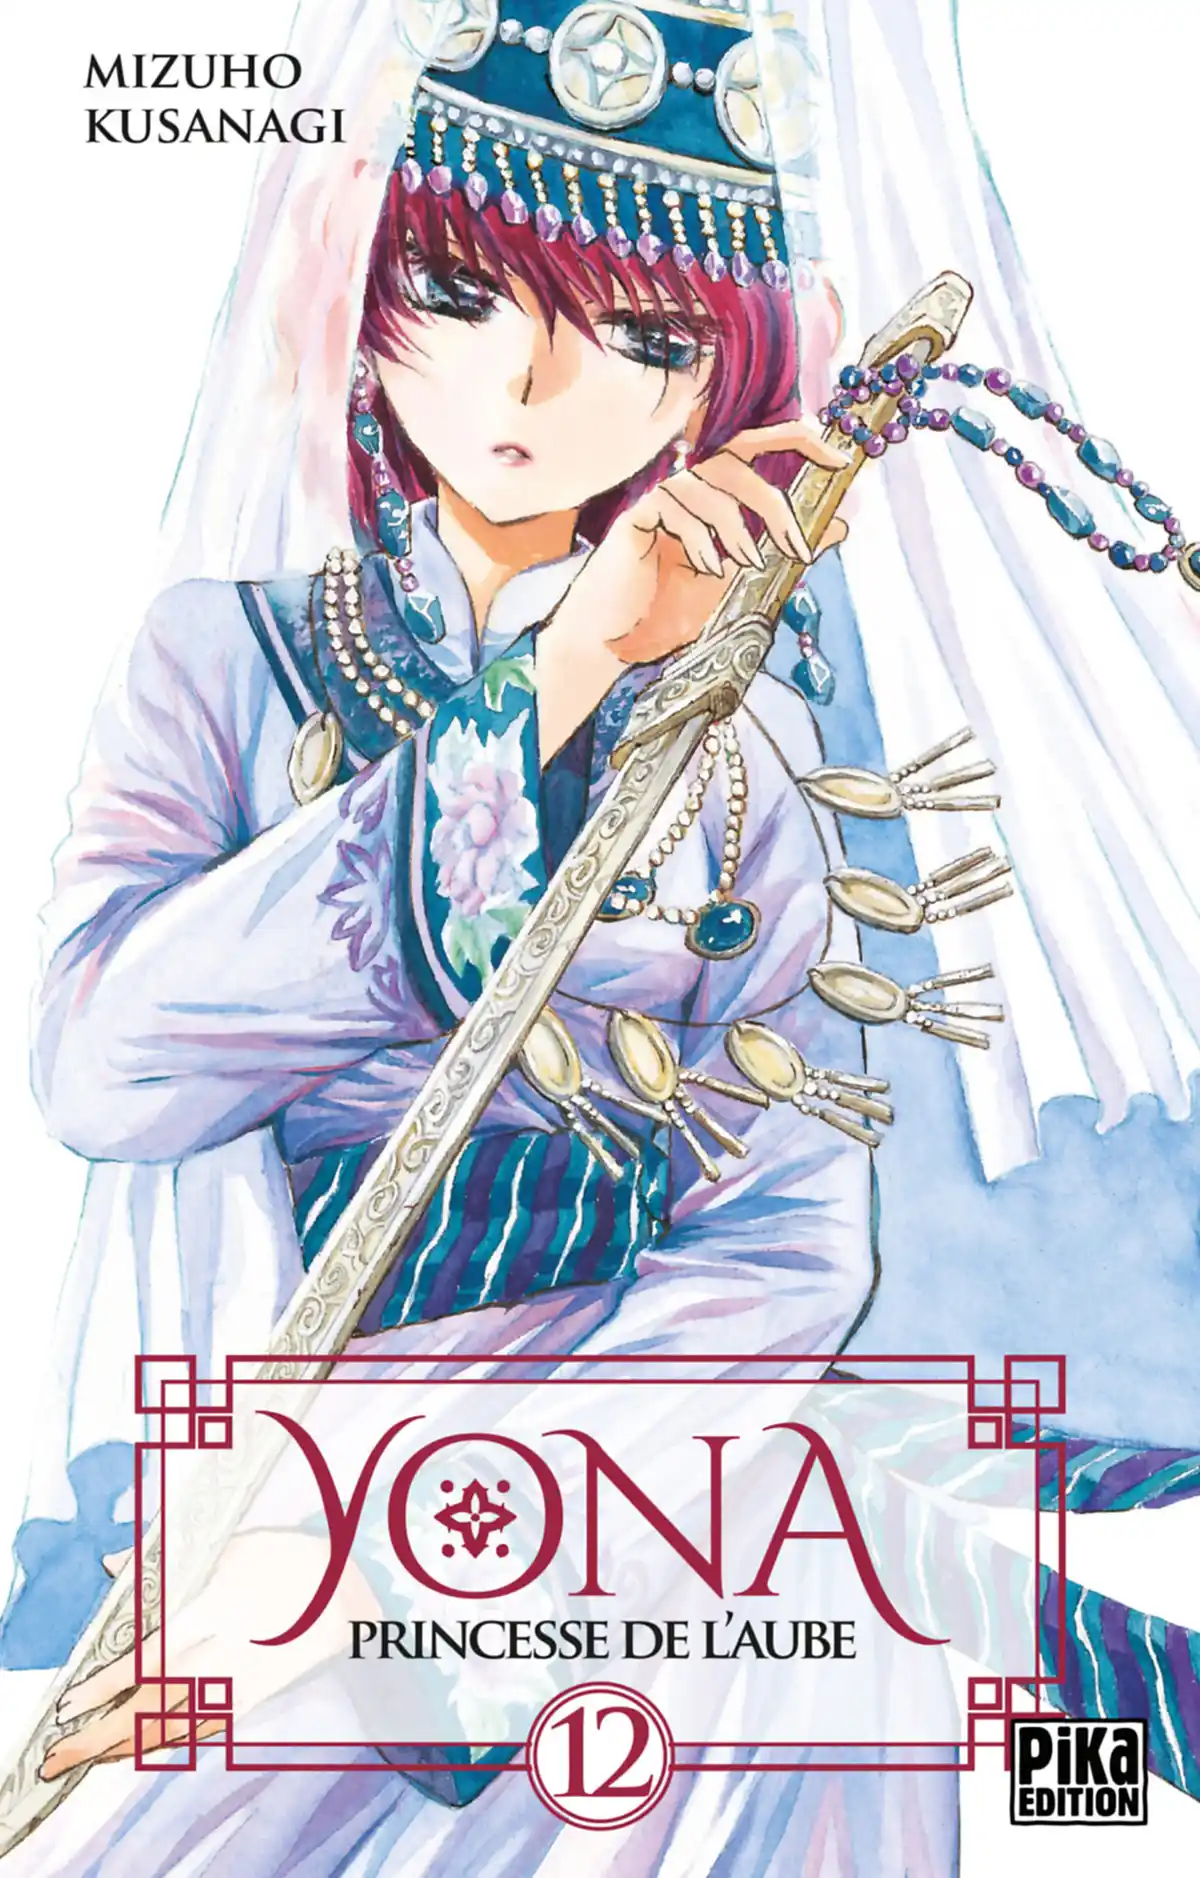 Yona, Princesse de l’Aube Volume 12 page 1